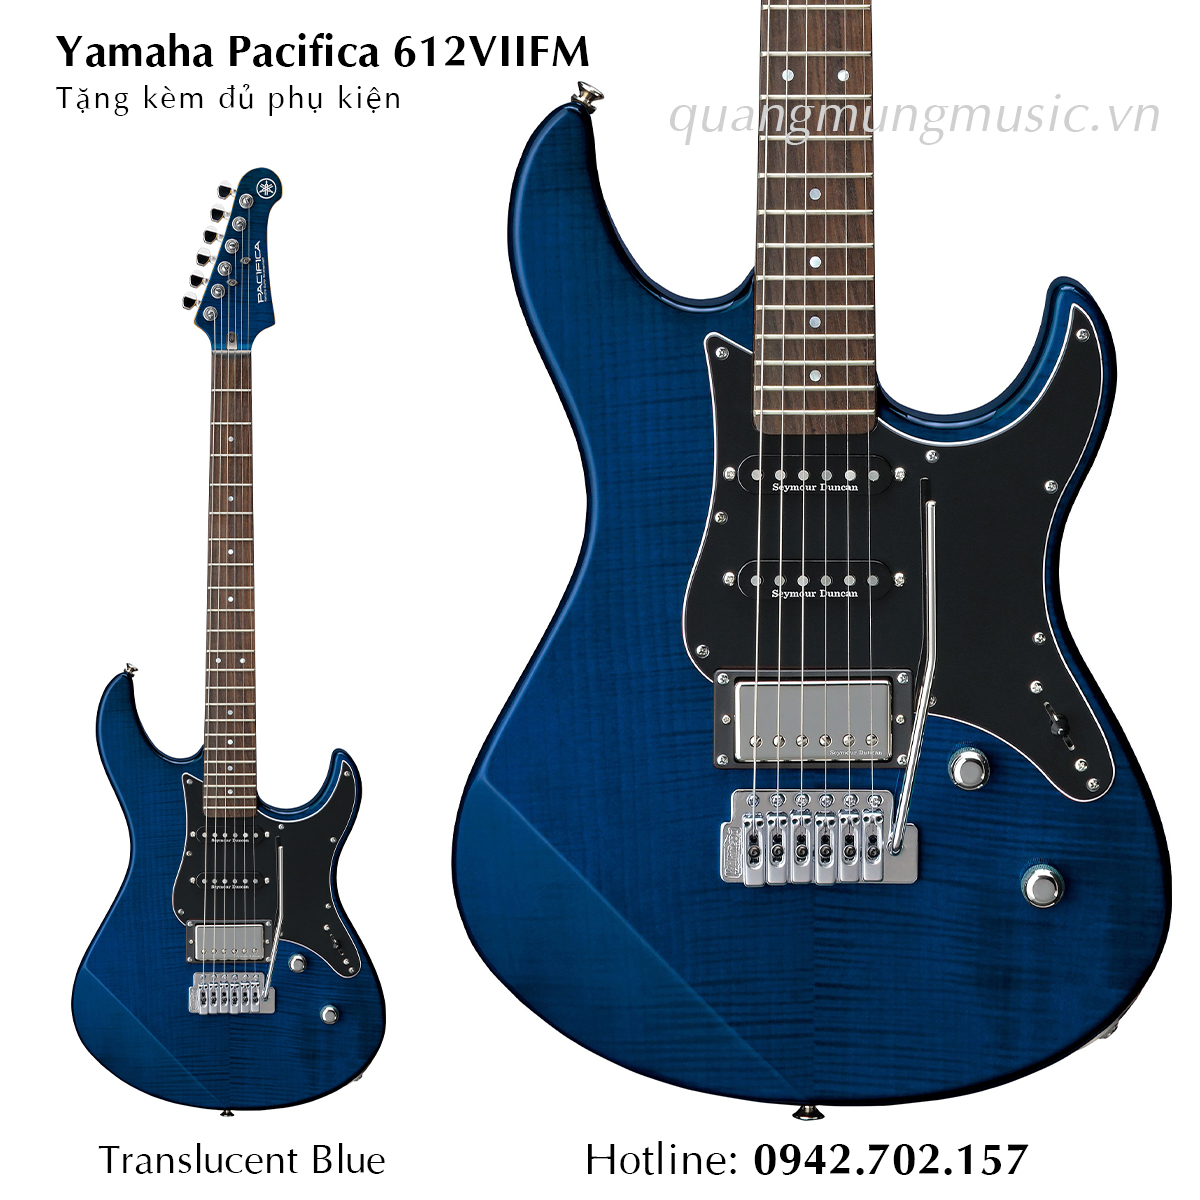 Yamaha Pacifica 612VIIFM-Translucent Blue